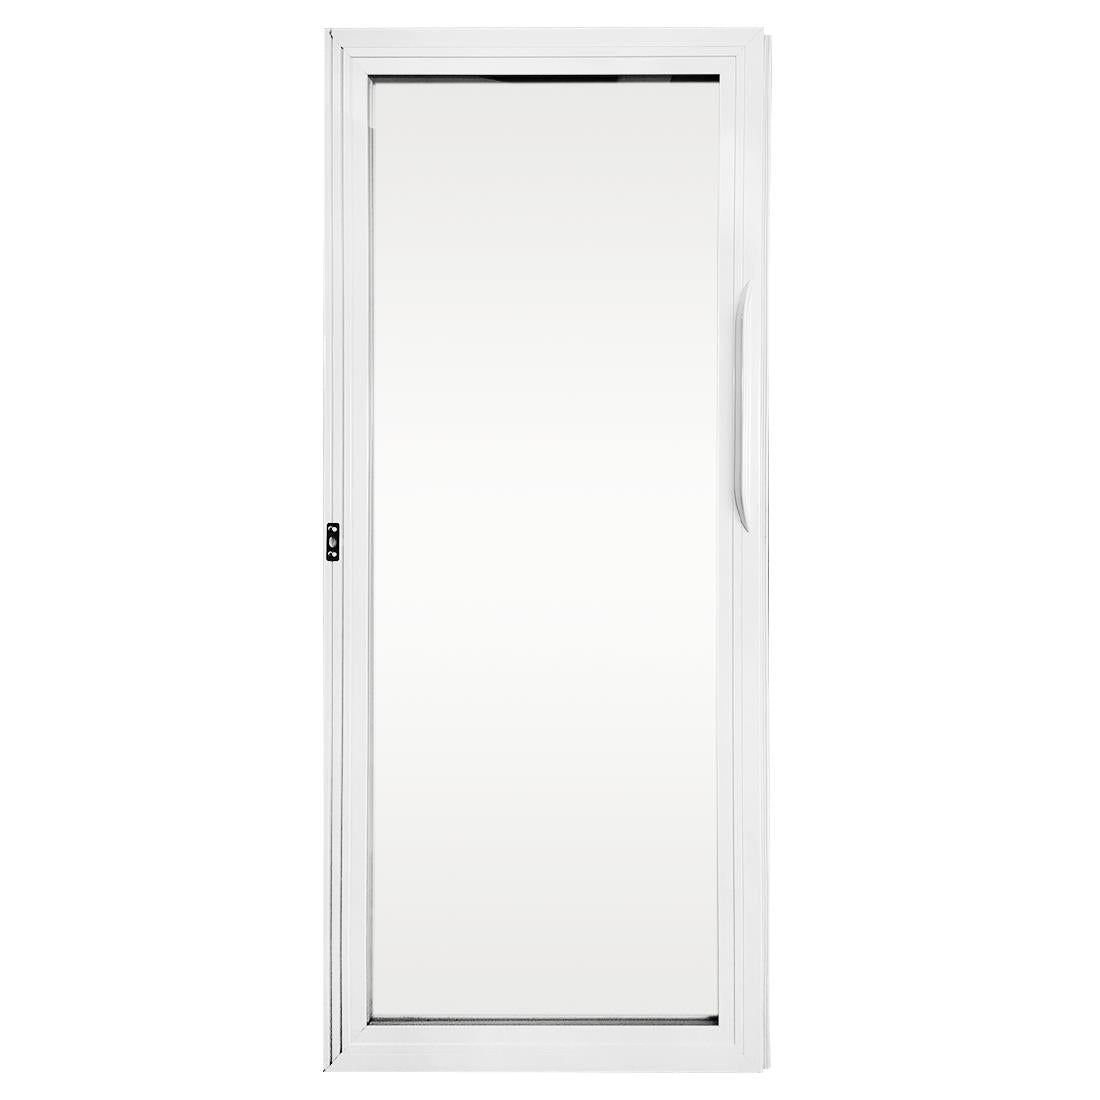 AK871 Polar Complete Glass Door Right JD Catering Equipment Solutions Ltd